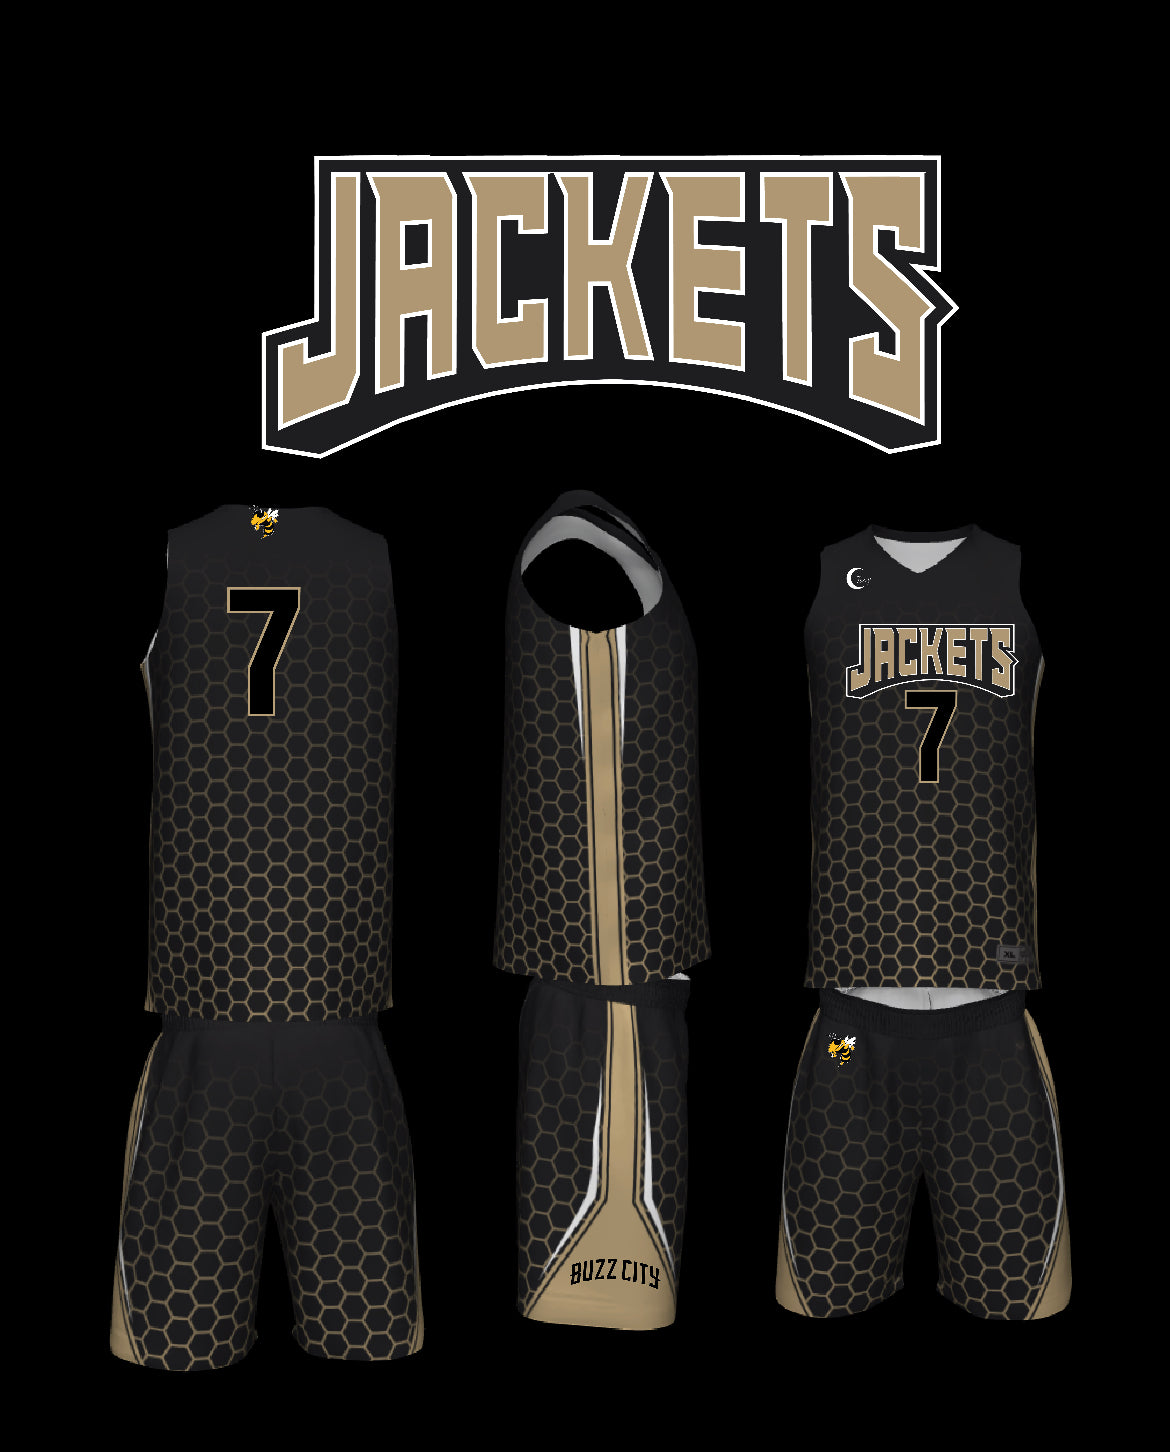 Custom Basketball Uniforms & Basketball Jerseys